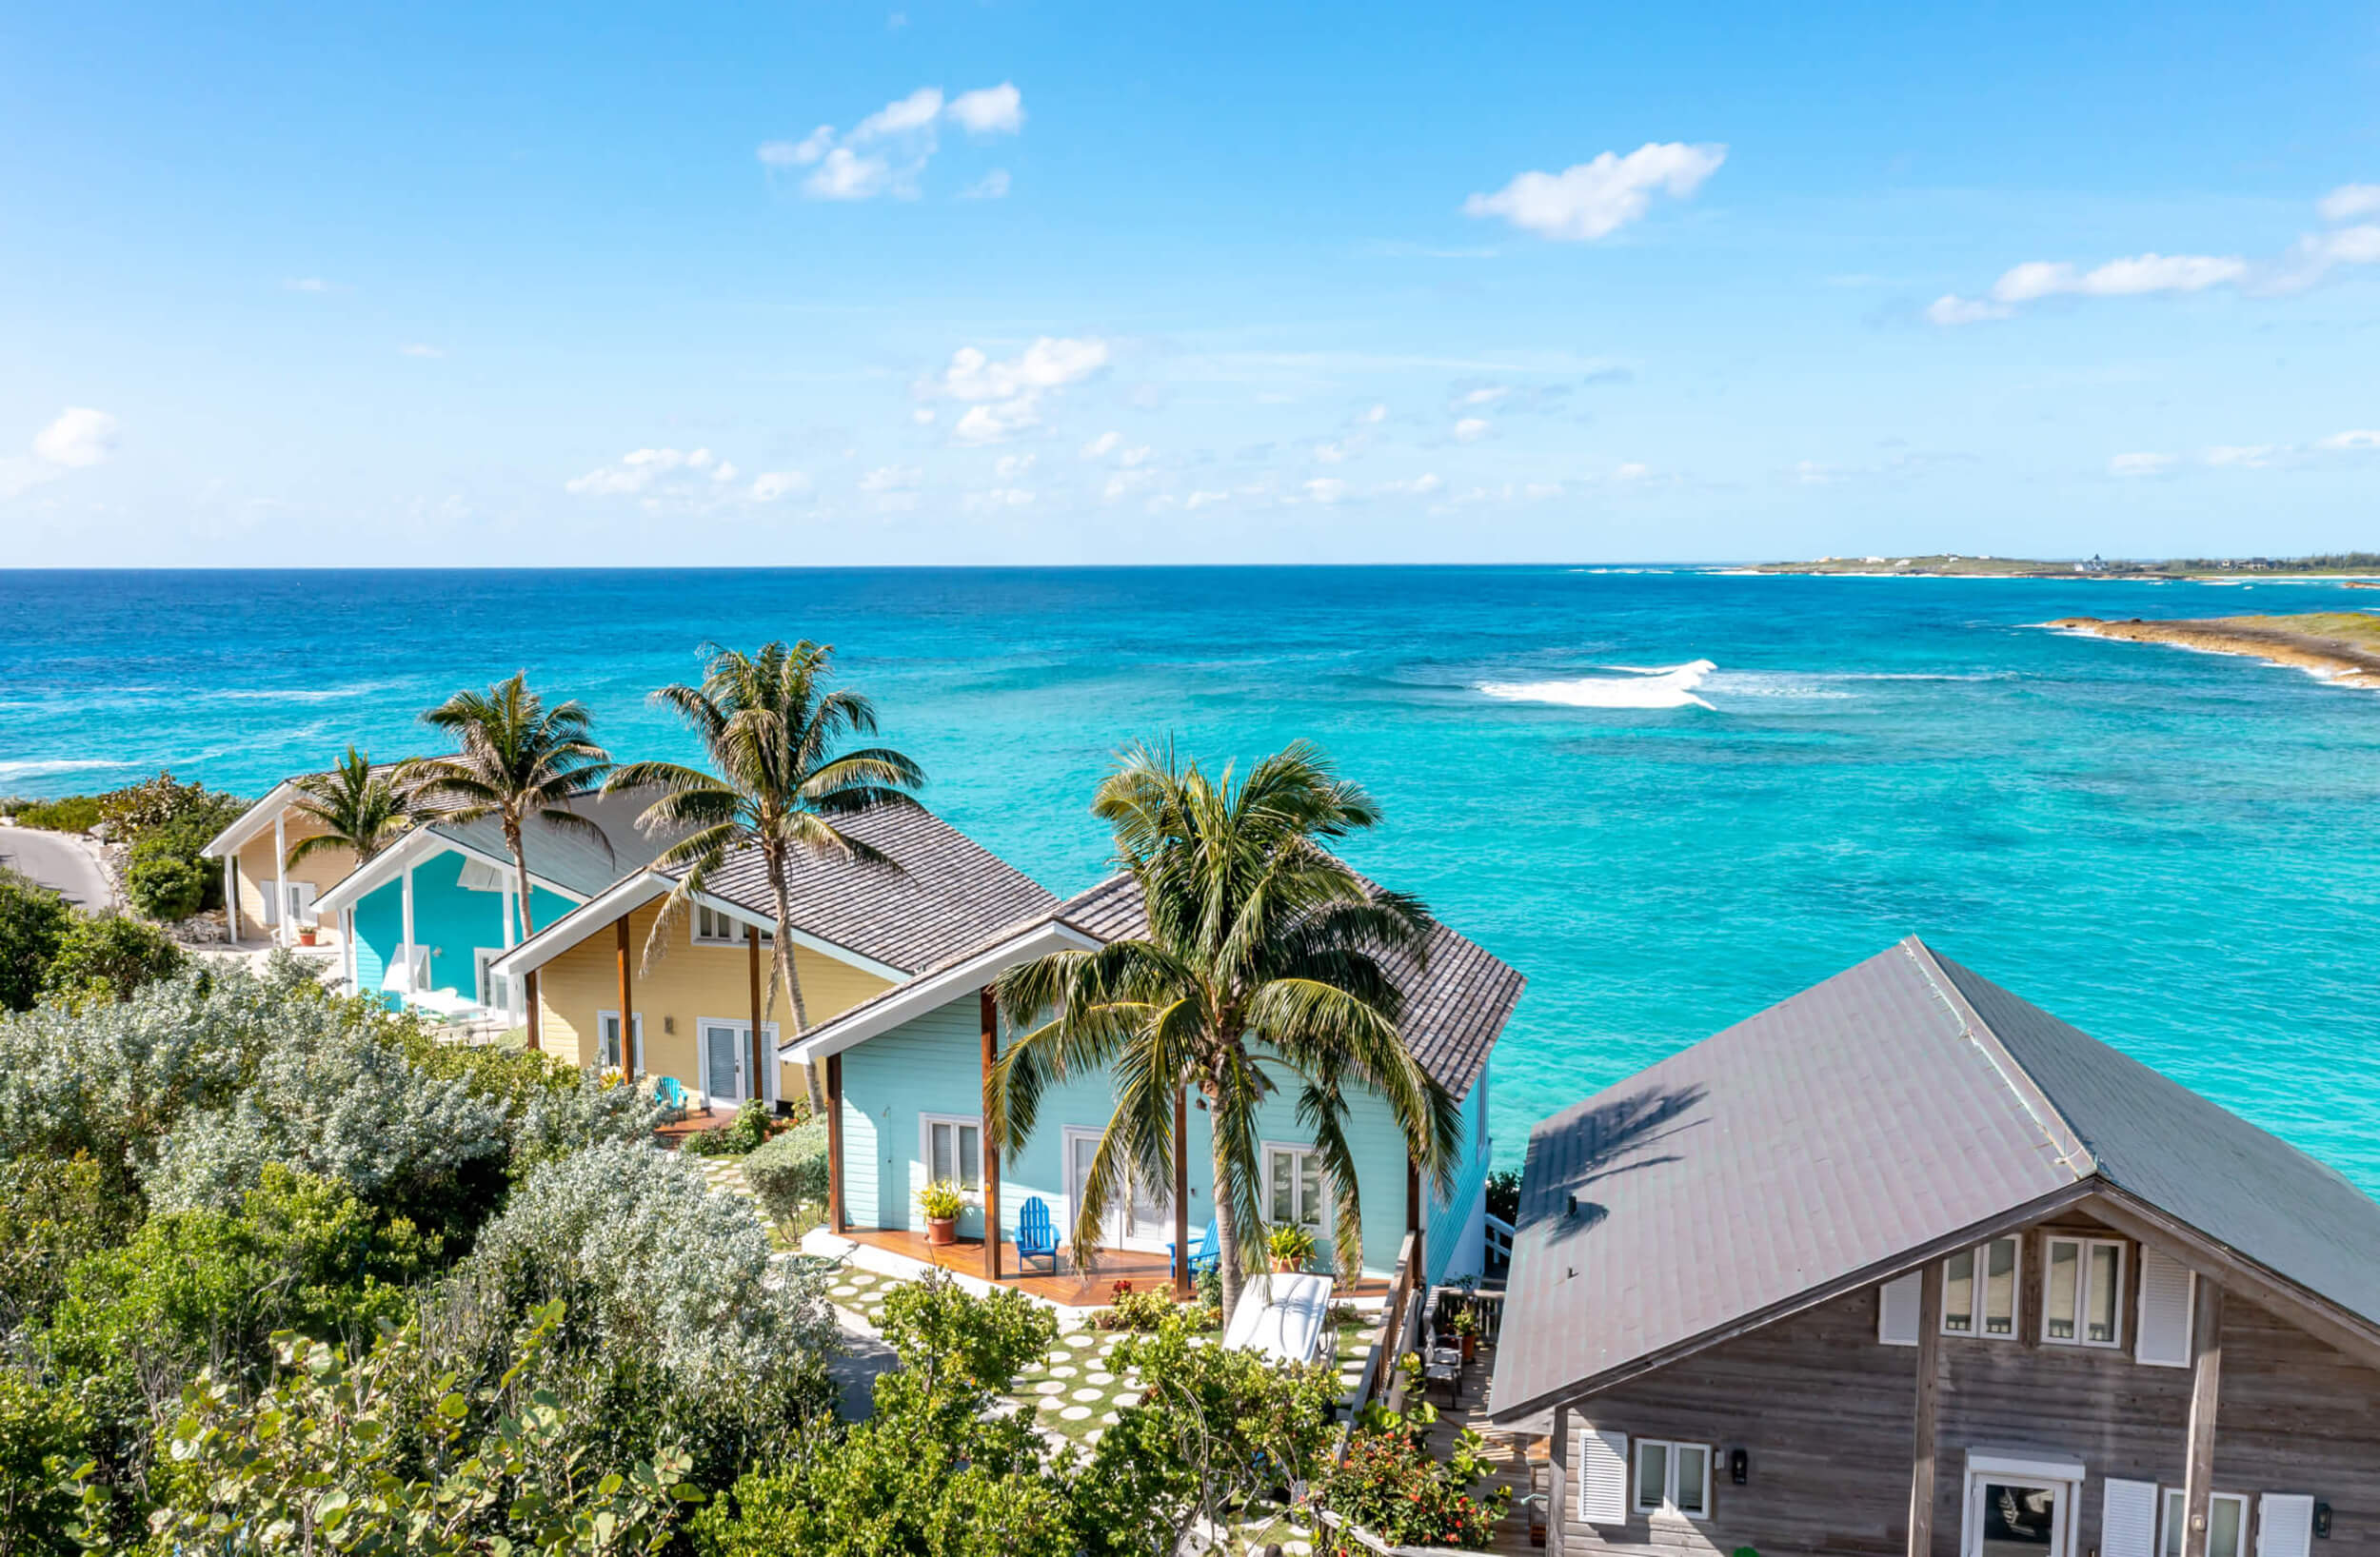 Panoramic of the Bahamian Sea